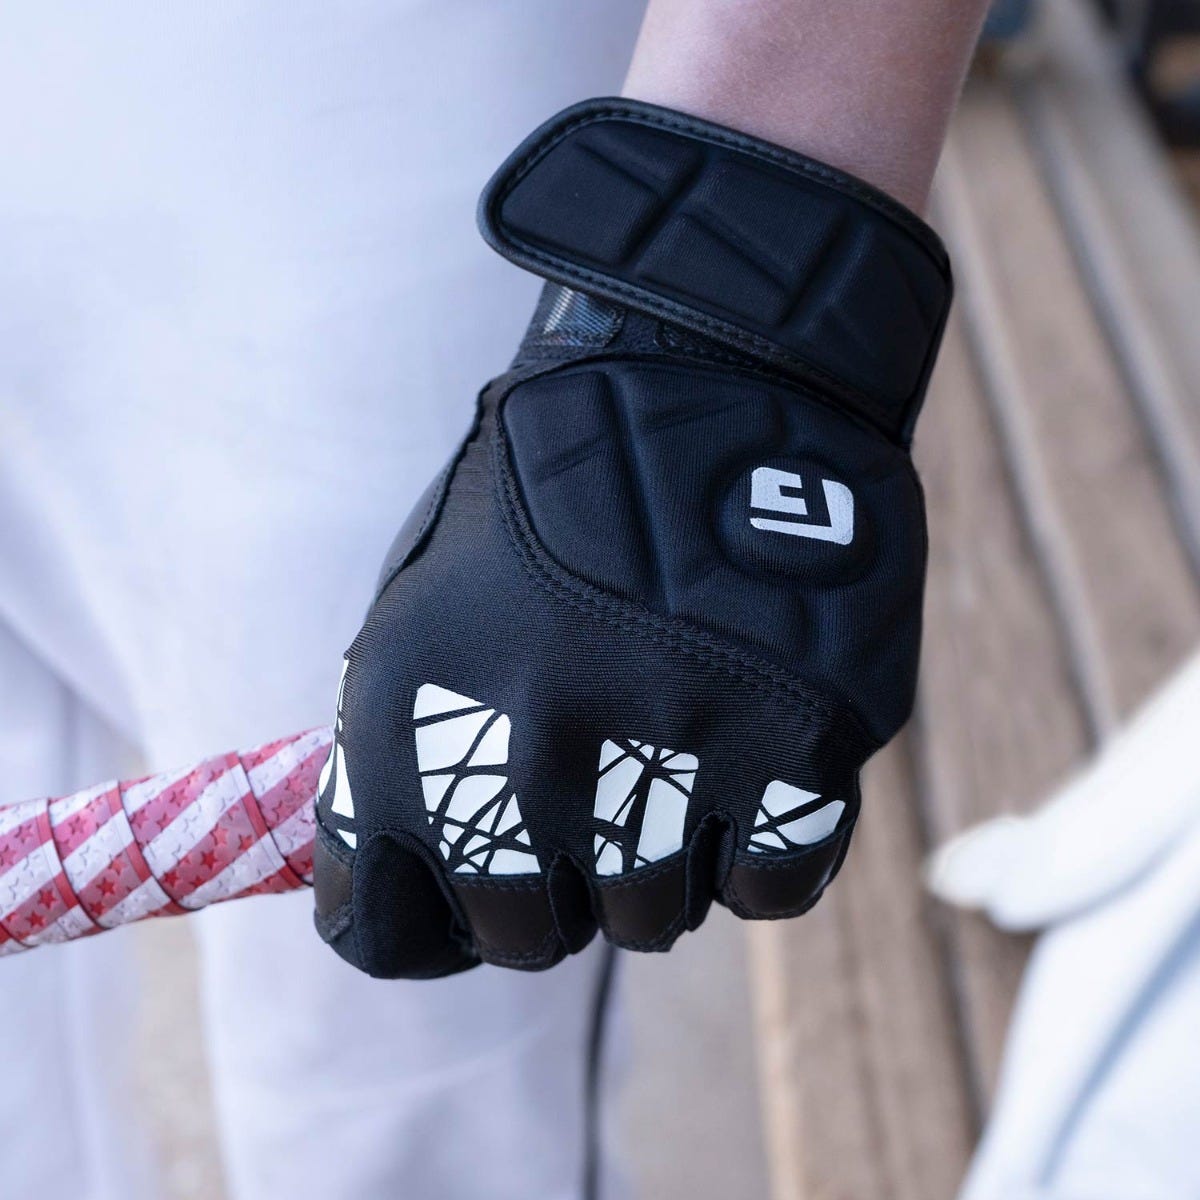 G-Form Baseball/Softball Batting Gloves - Black - Adult Small(1 Pair)